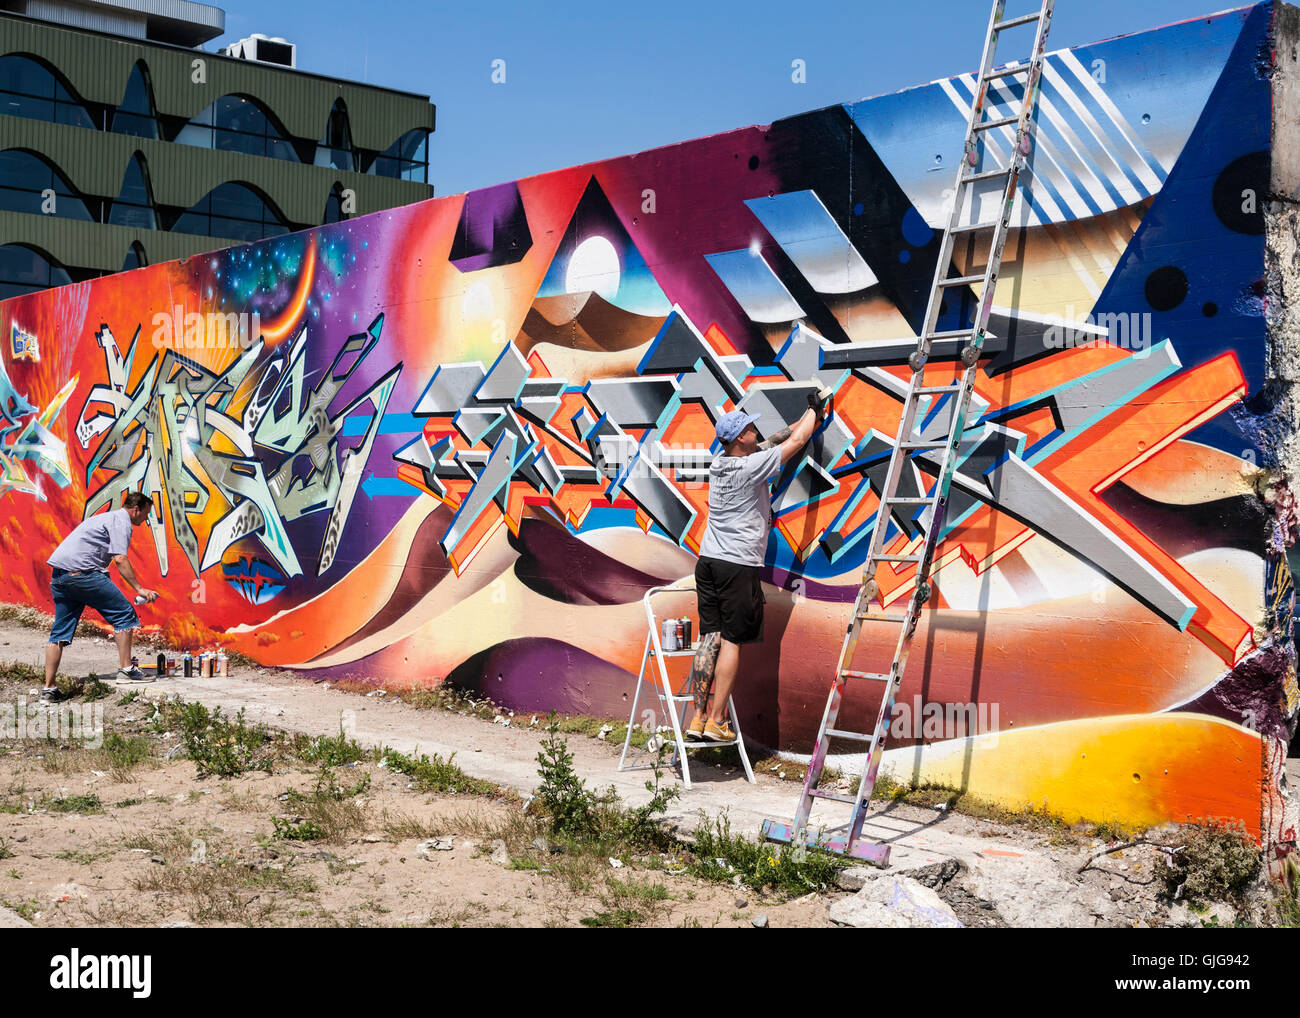 Graffiti artists hard at work painting an old wall, Friedrichshain, Berlin, Germany. Stock Photo